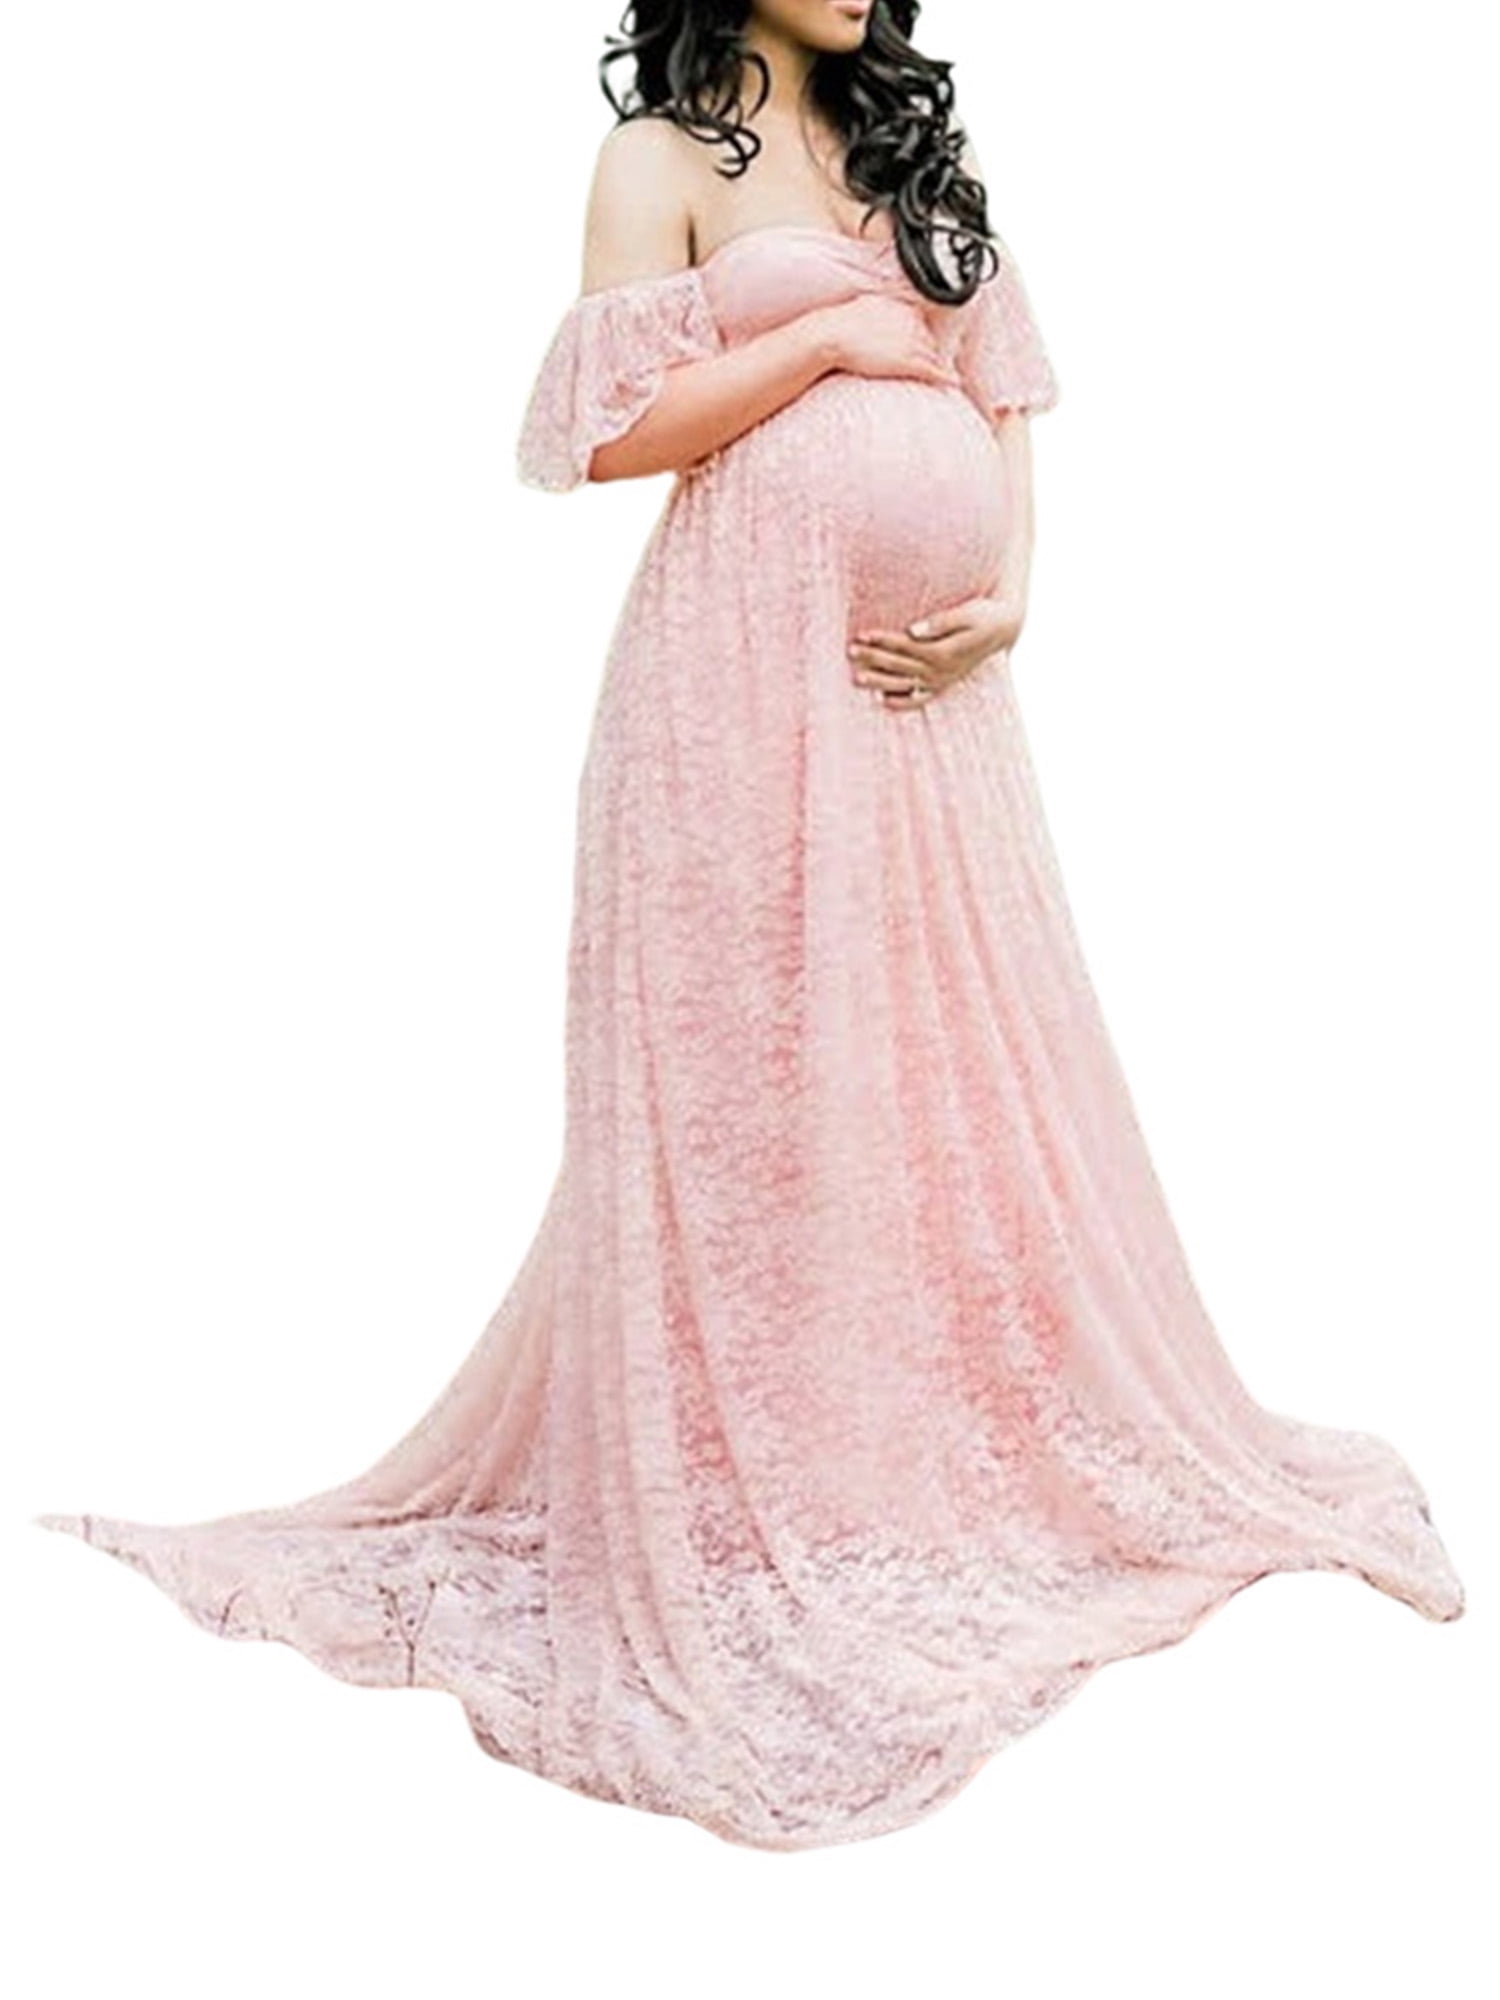 Maxi Dress Lady Cotton Short Sleeve Pregnant Photo Prop Dress Maternity Gown 